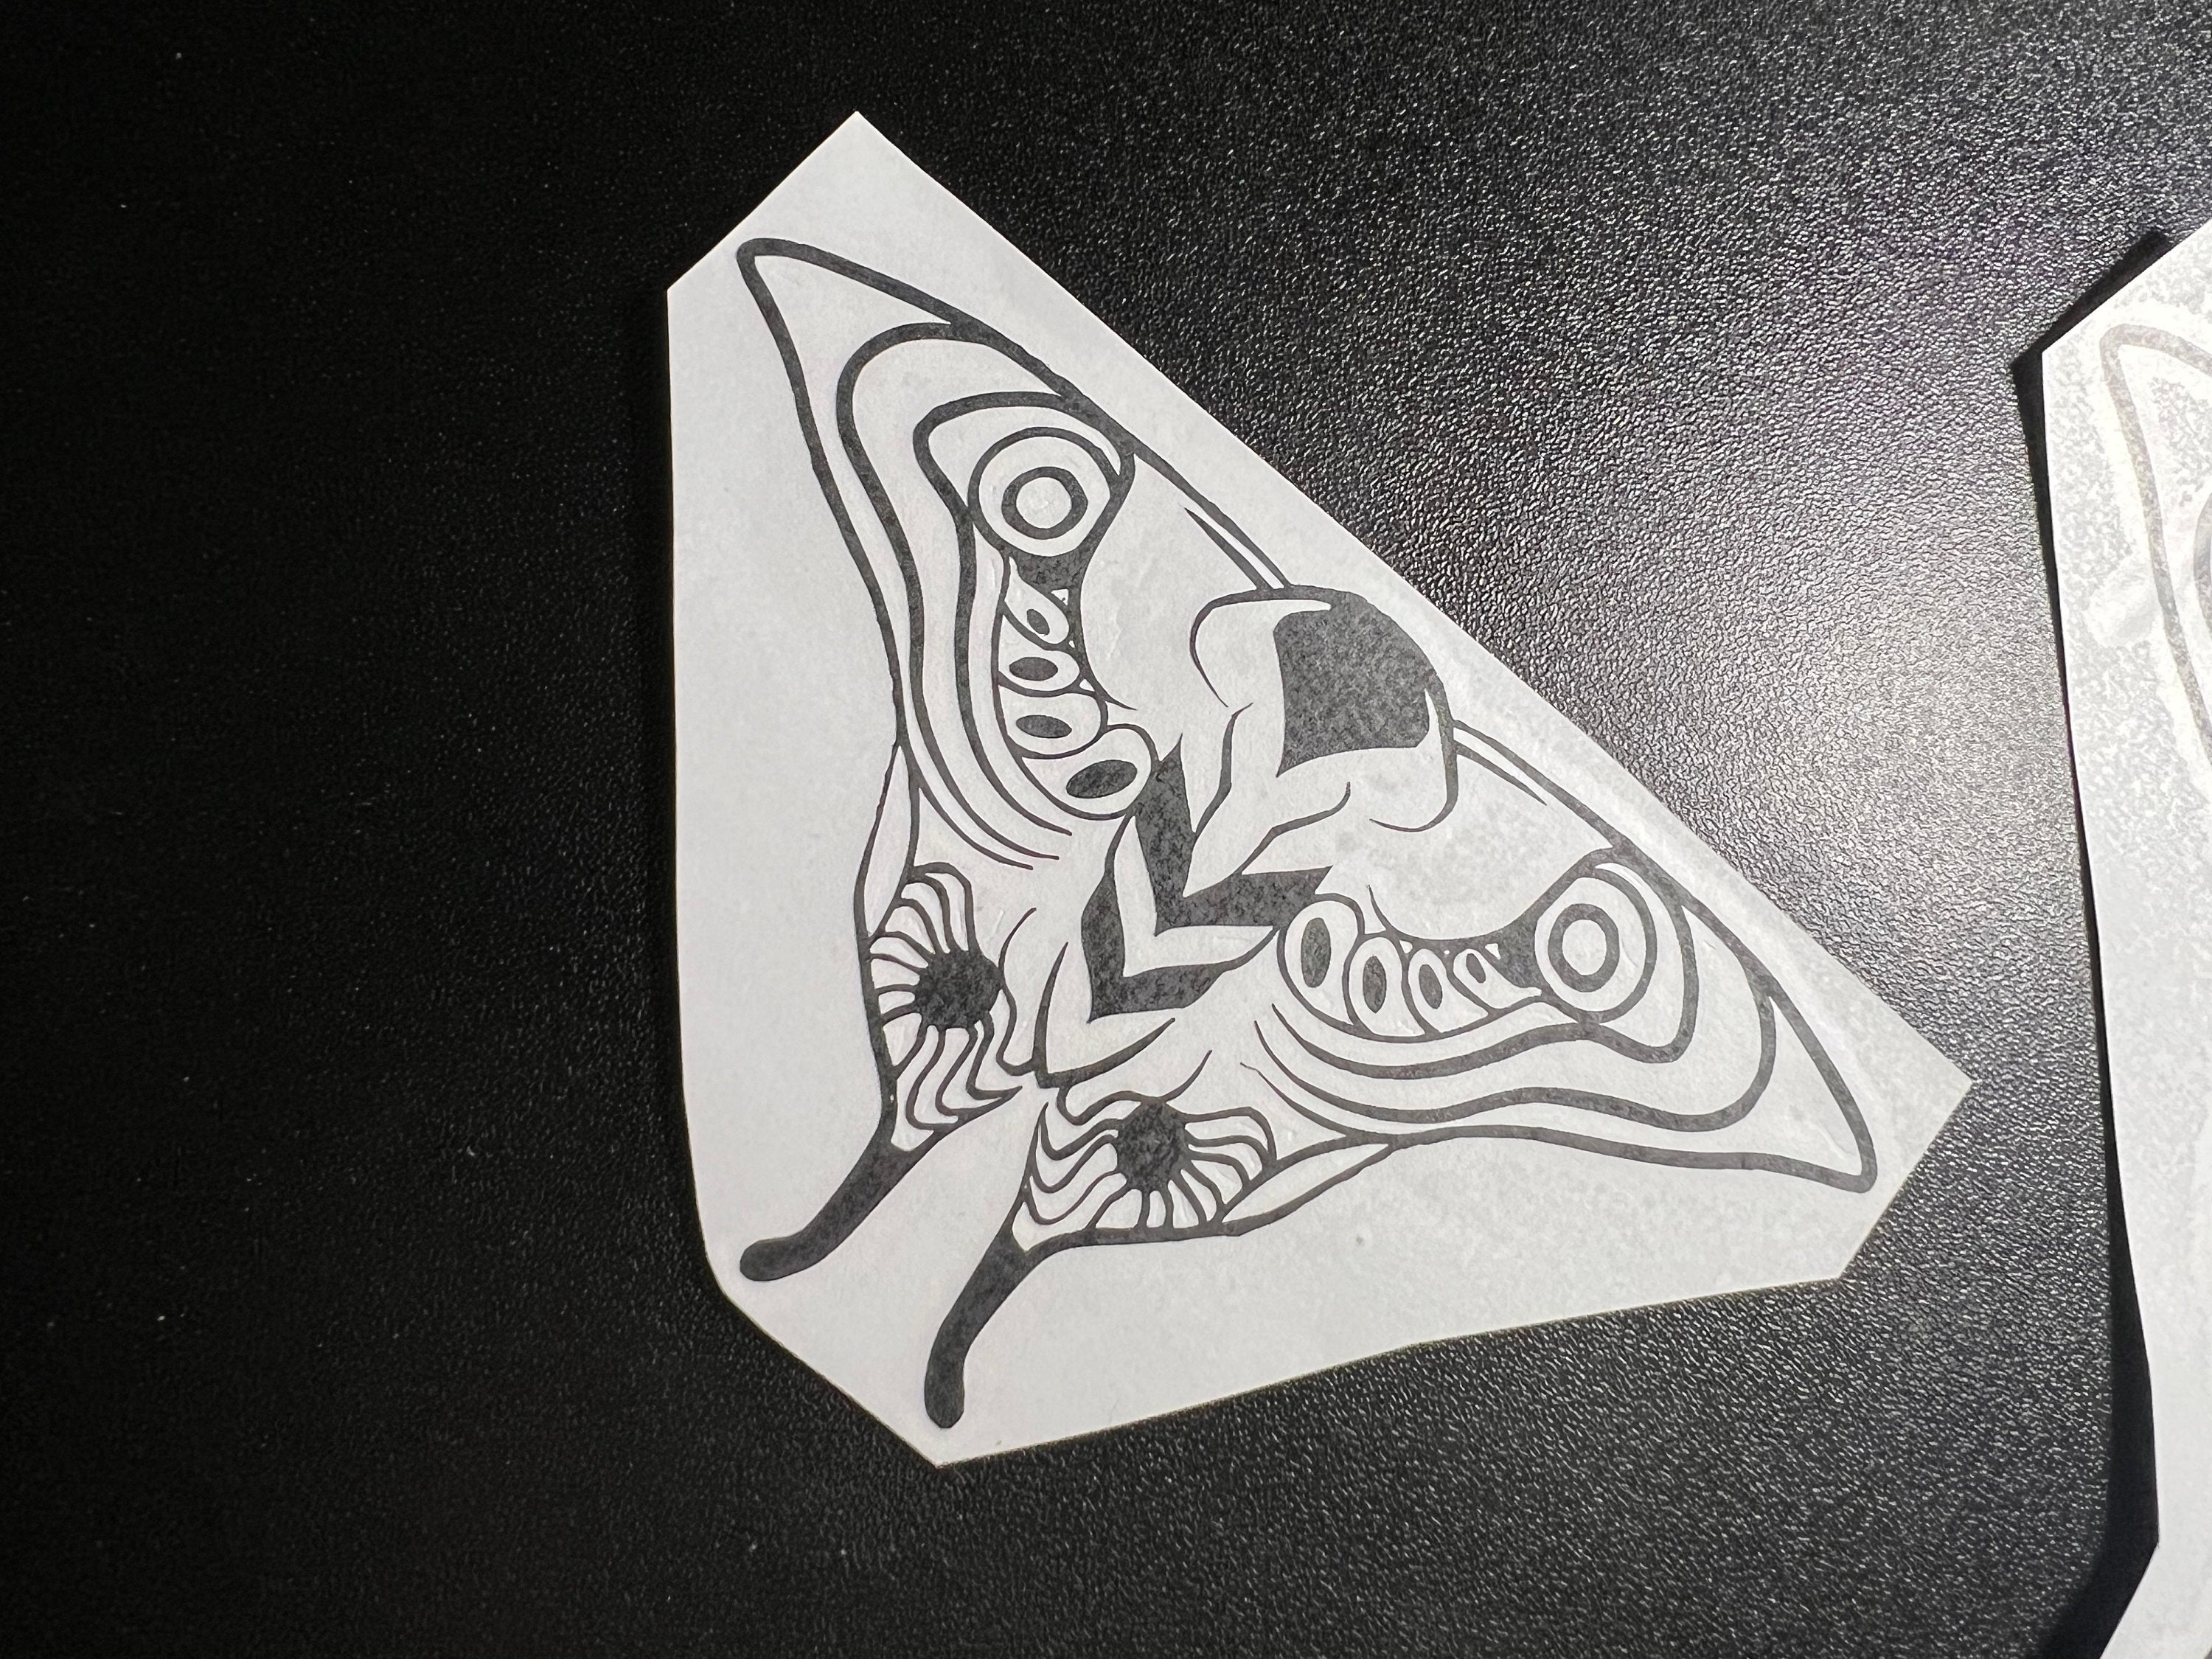 Moth Tattoo Art, Muerte Moth by Illustrated Ink, Needle Craft